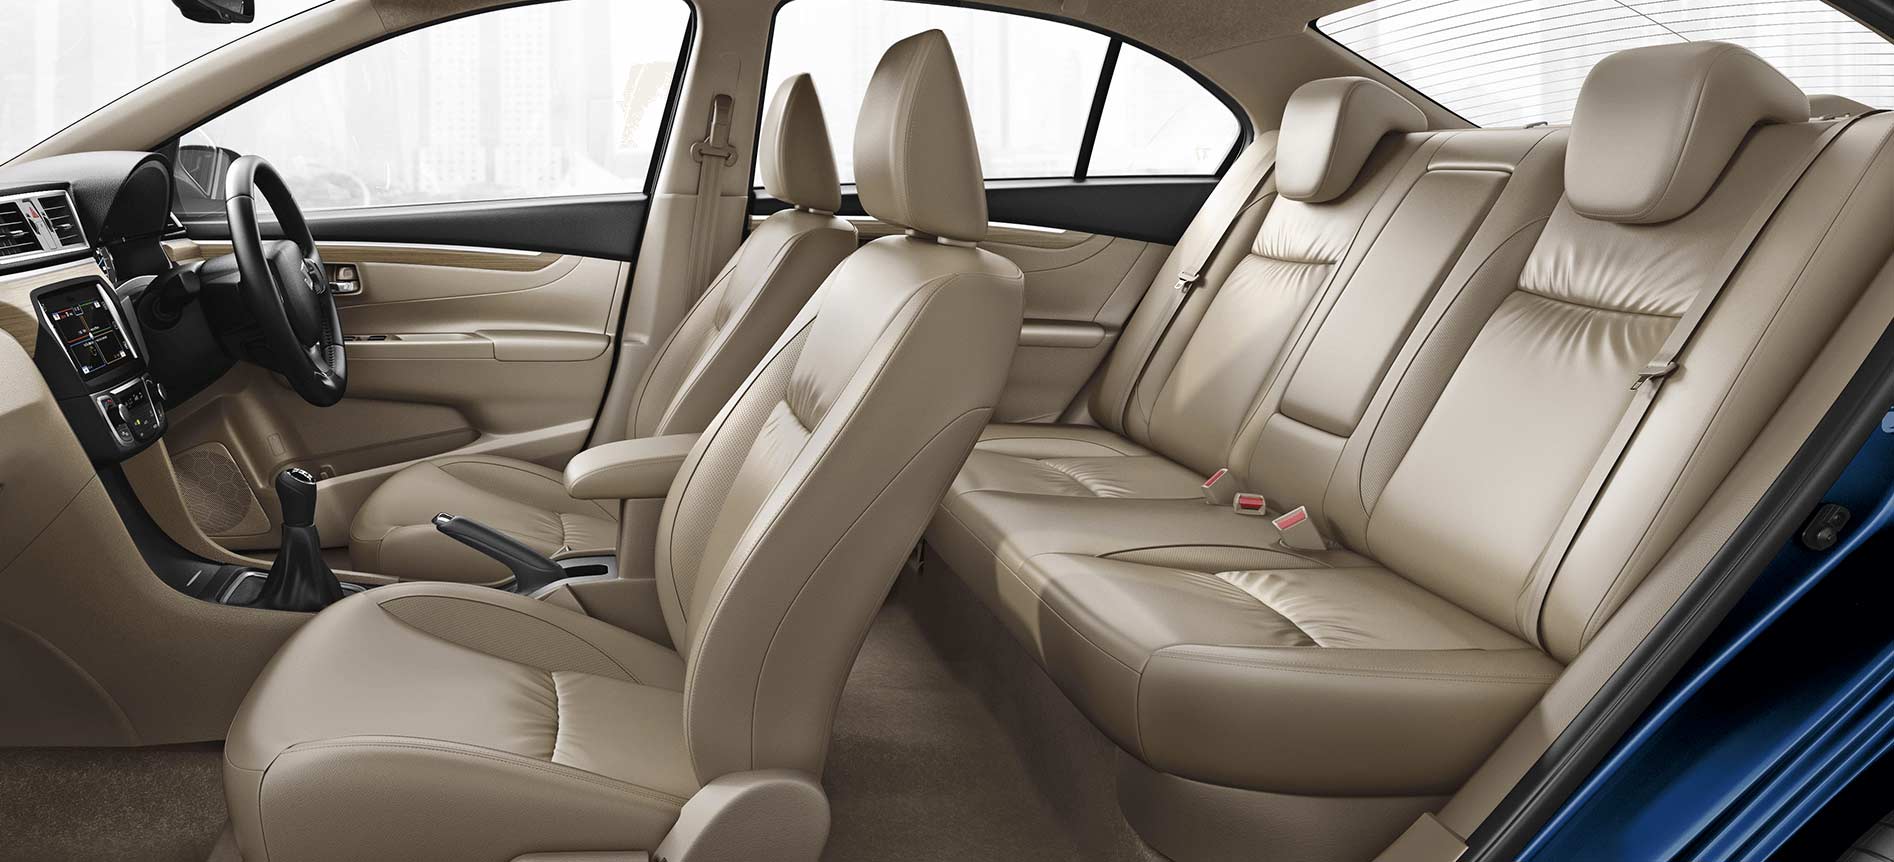 2018-Maruti-Suzuki-Ciaz-facelift-interior